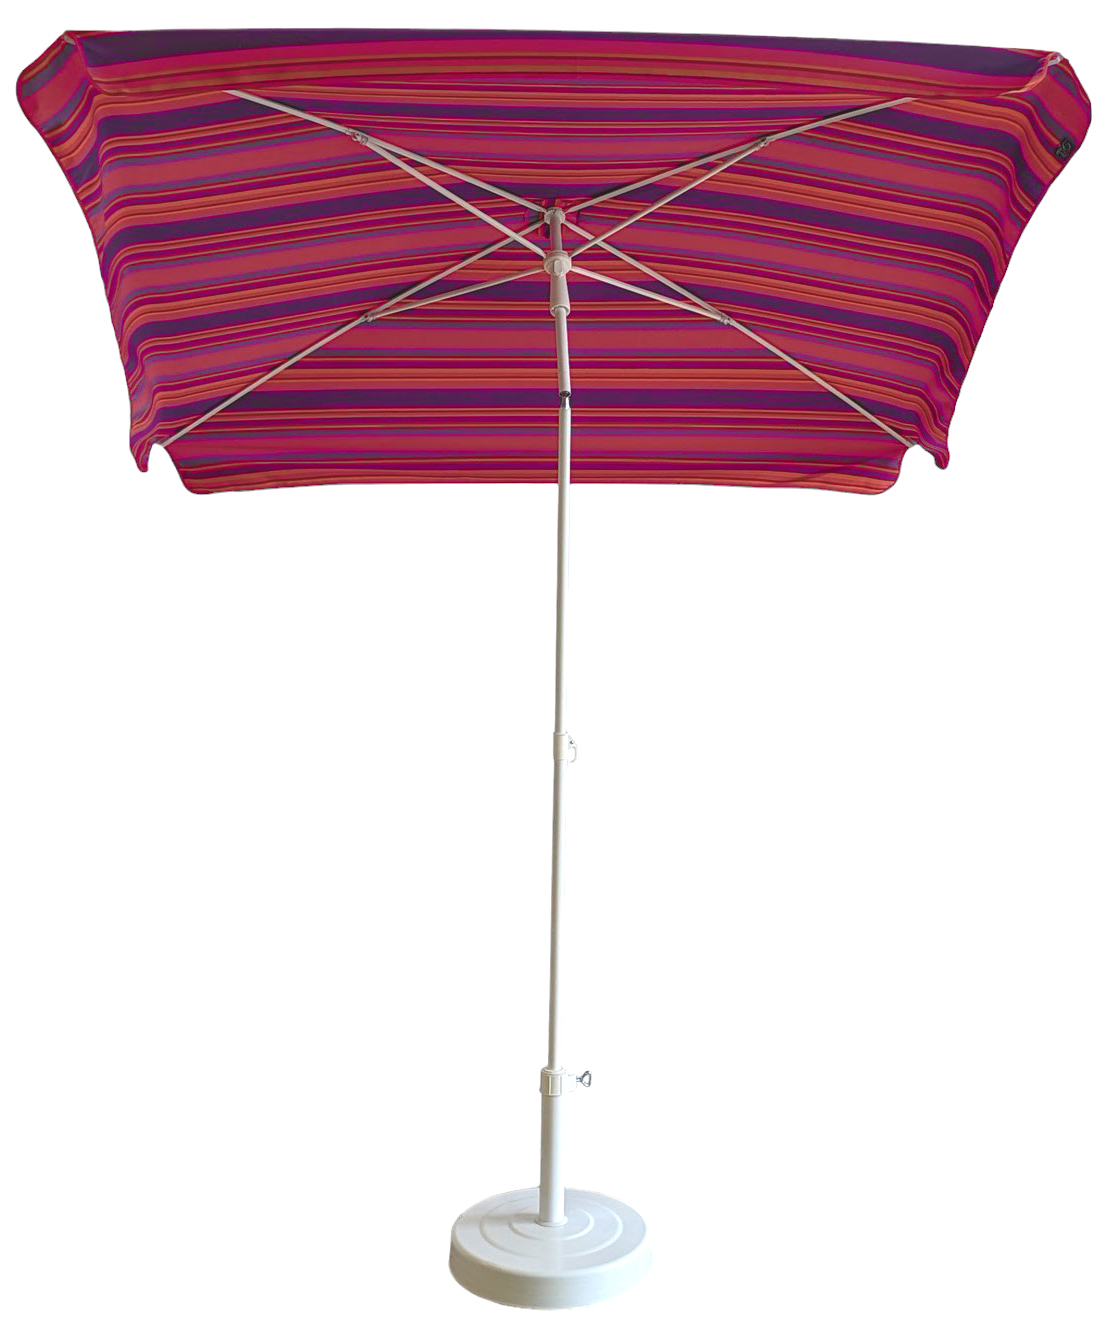 parasol-rect-rayure-fushia-165004